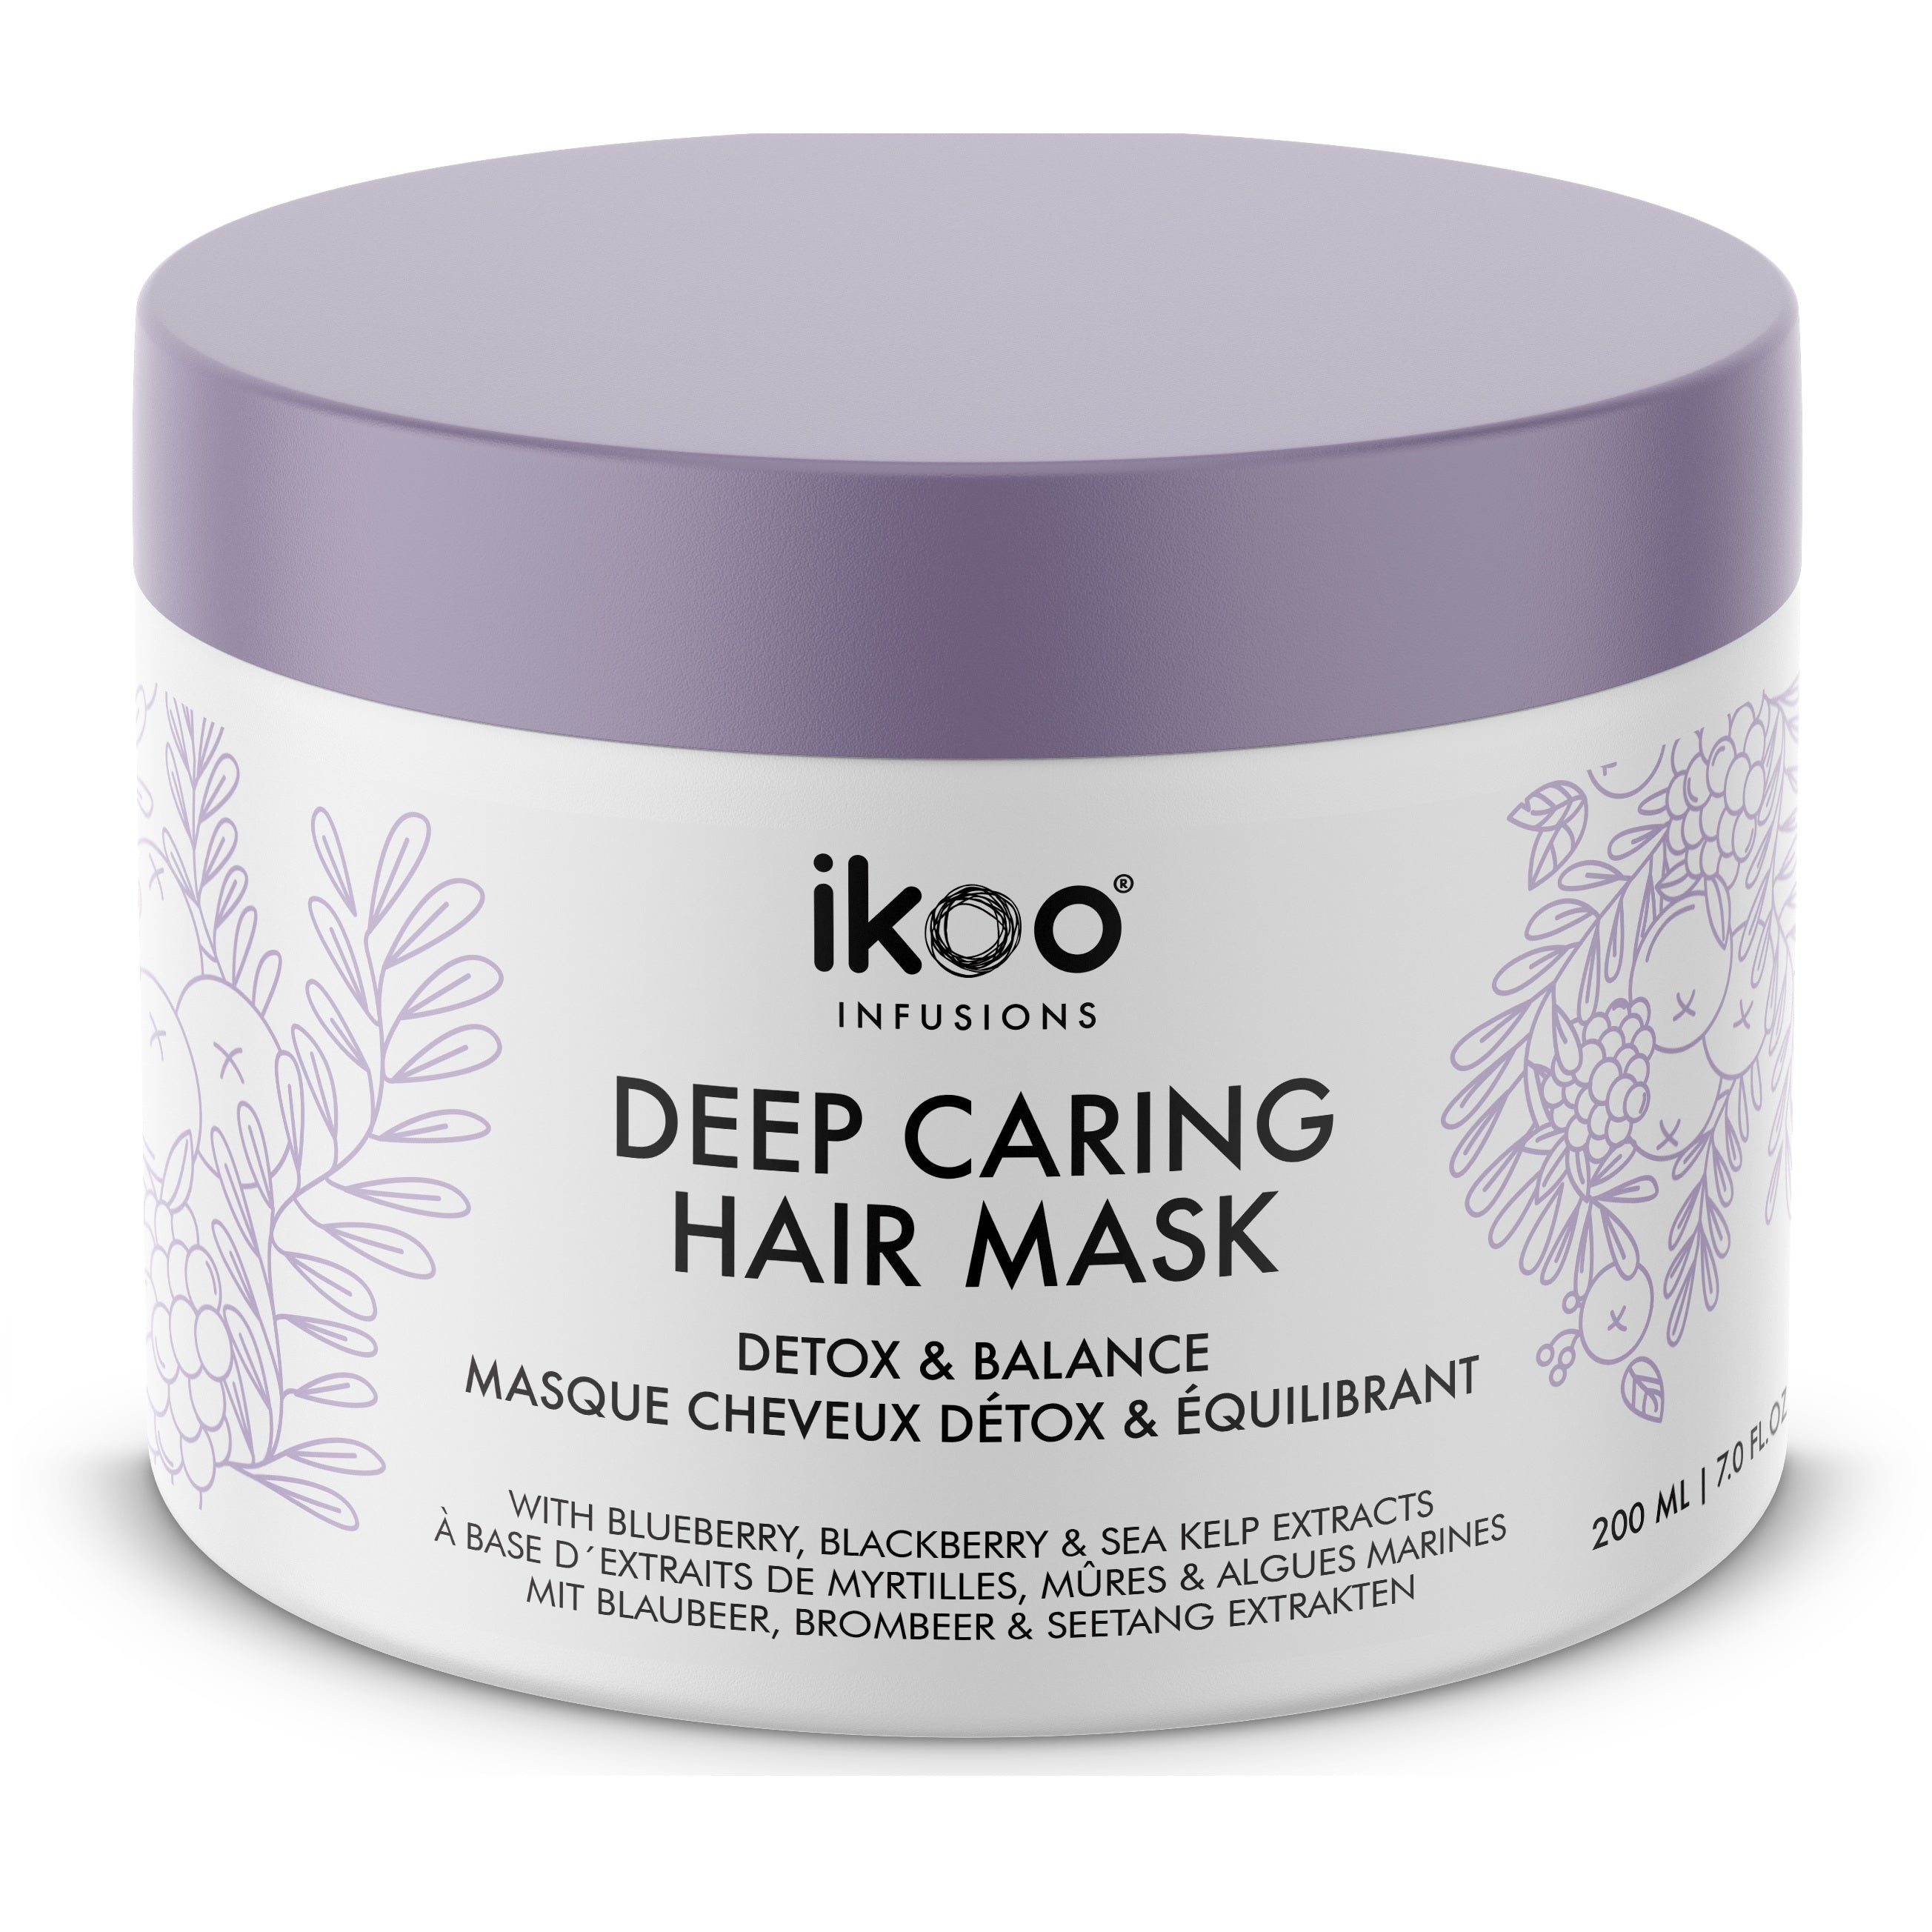 Ikoo Infusions - Deep Caring Mask - Detox & Balance - 200 ml